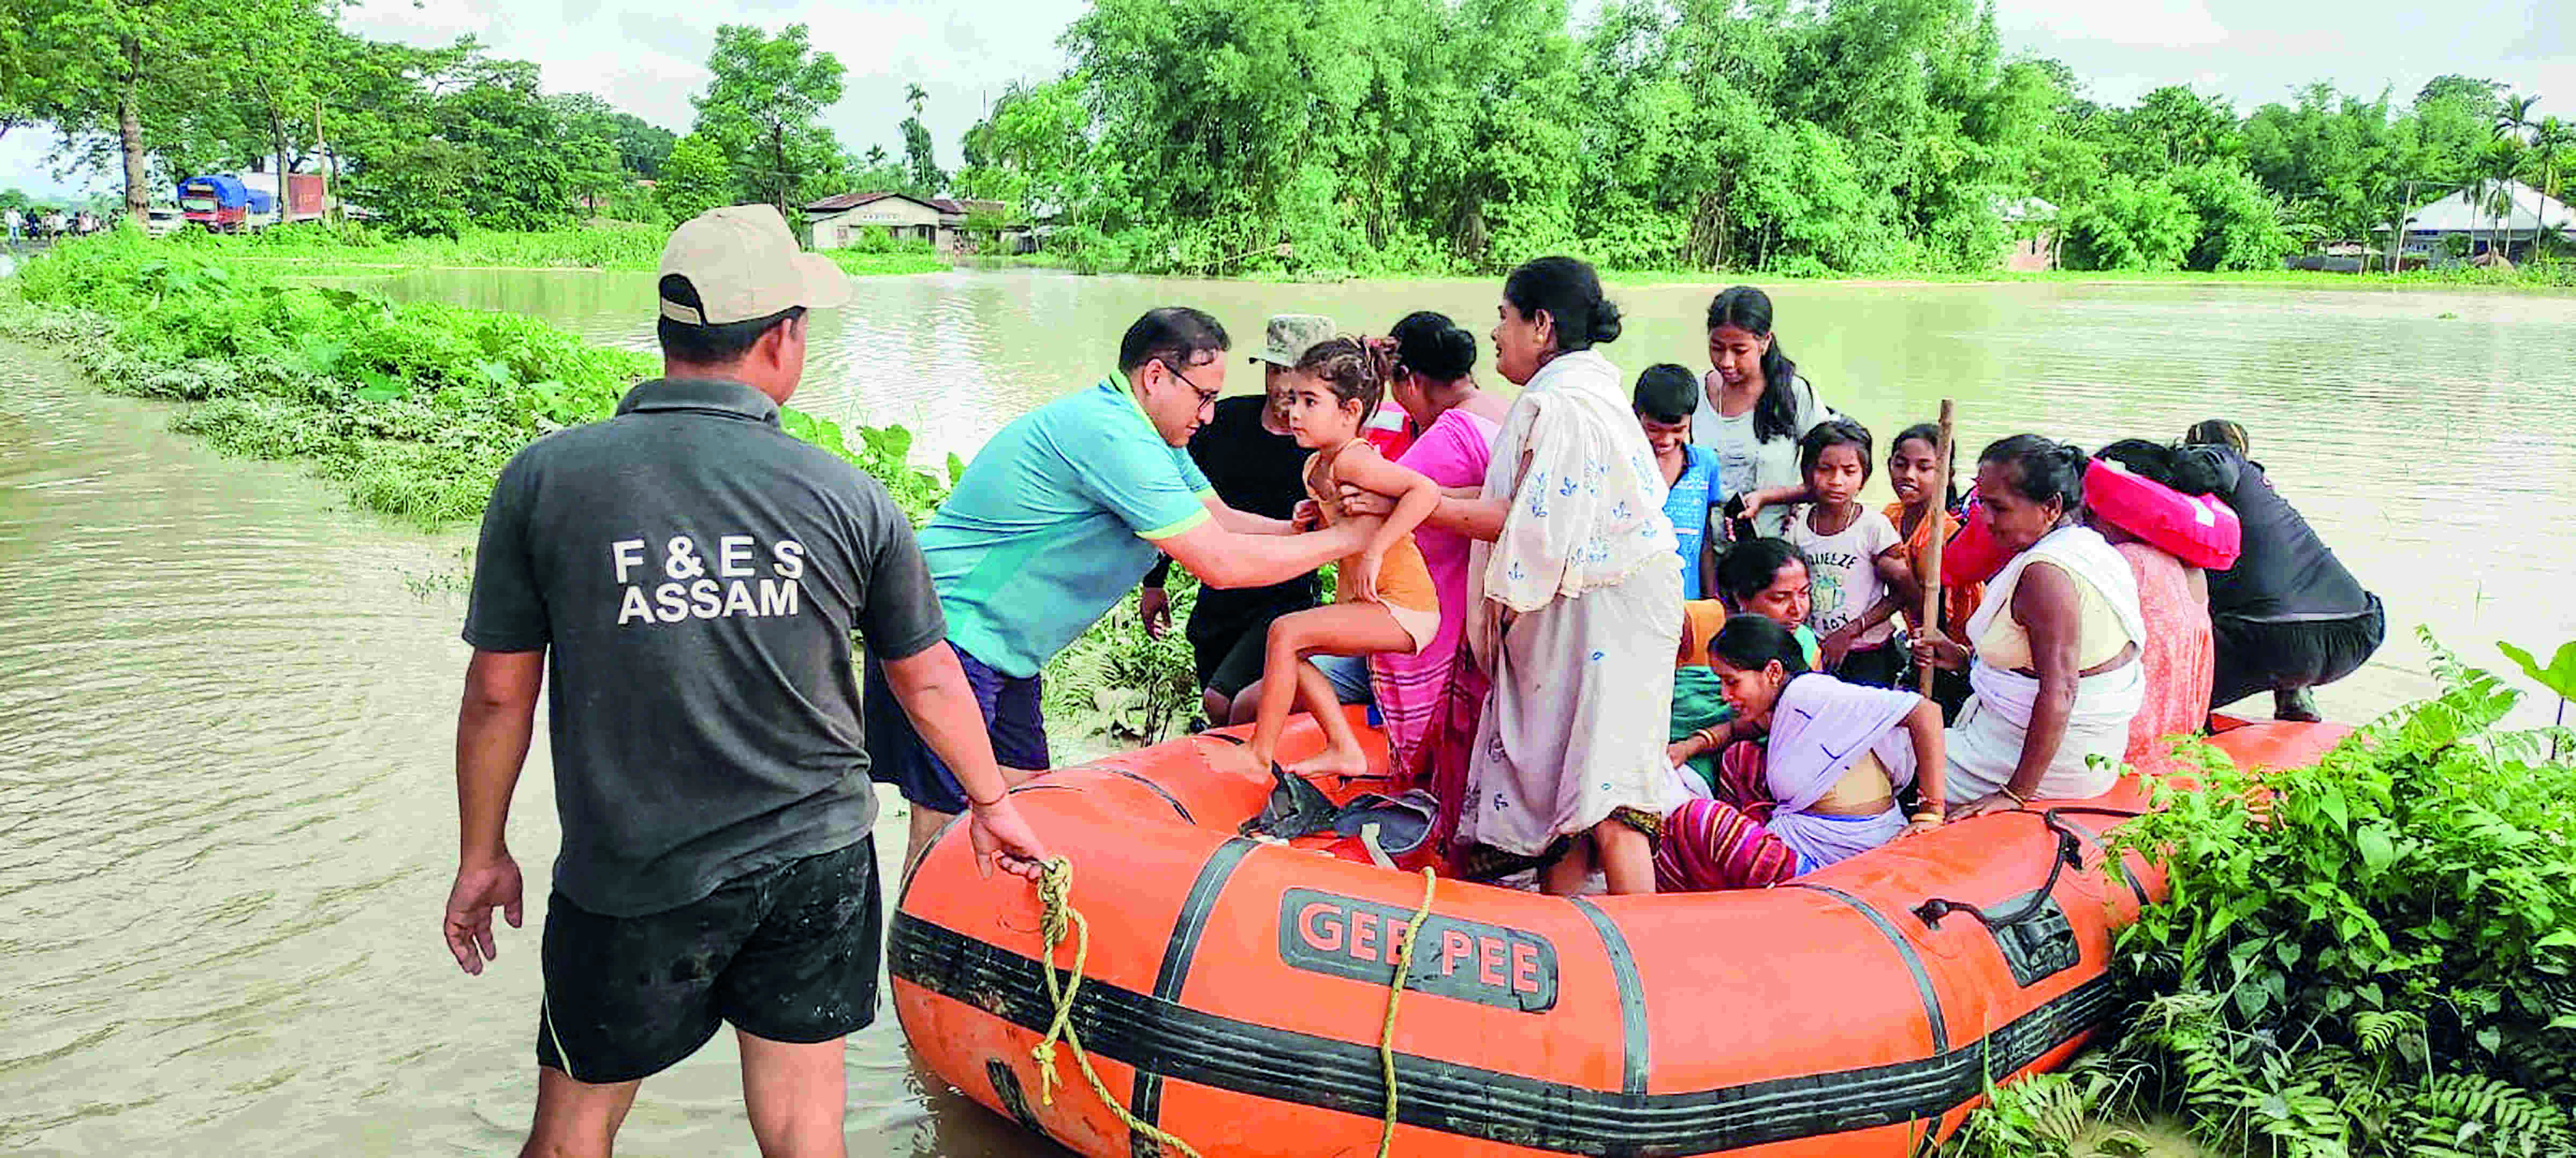 Flood situation in Assam grim